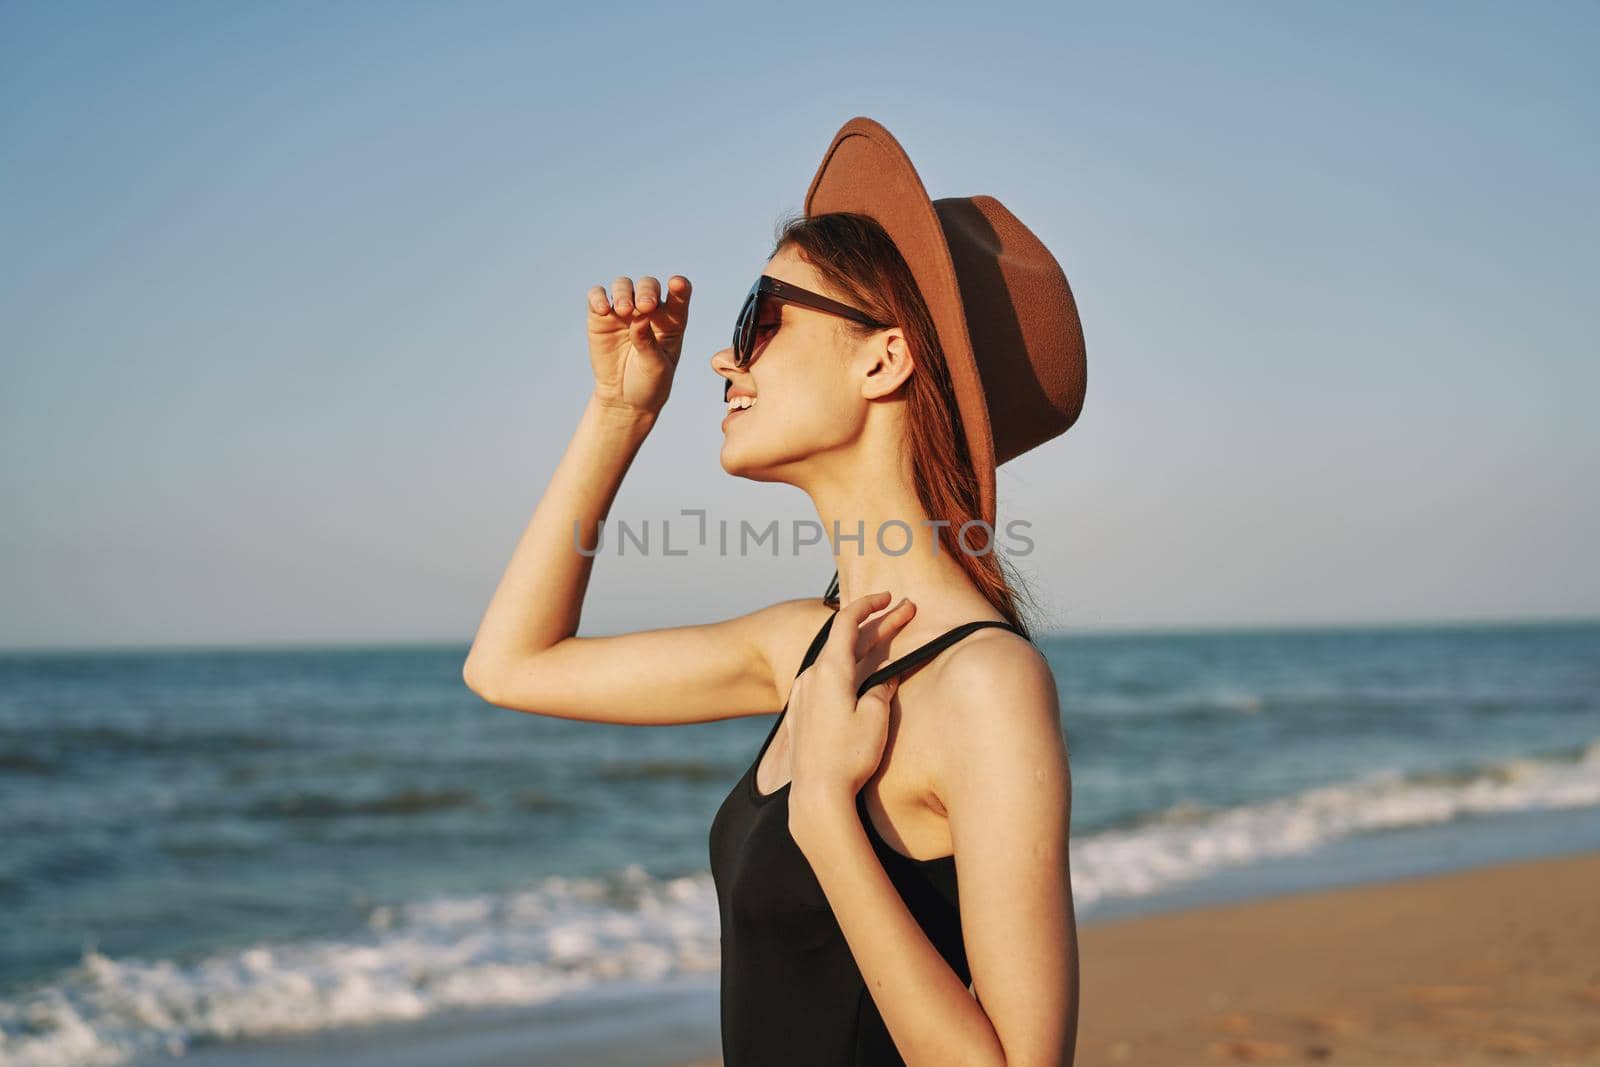 pretty woman on the beach summer vacation lifestyle sun. High quality photo